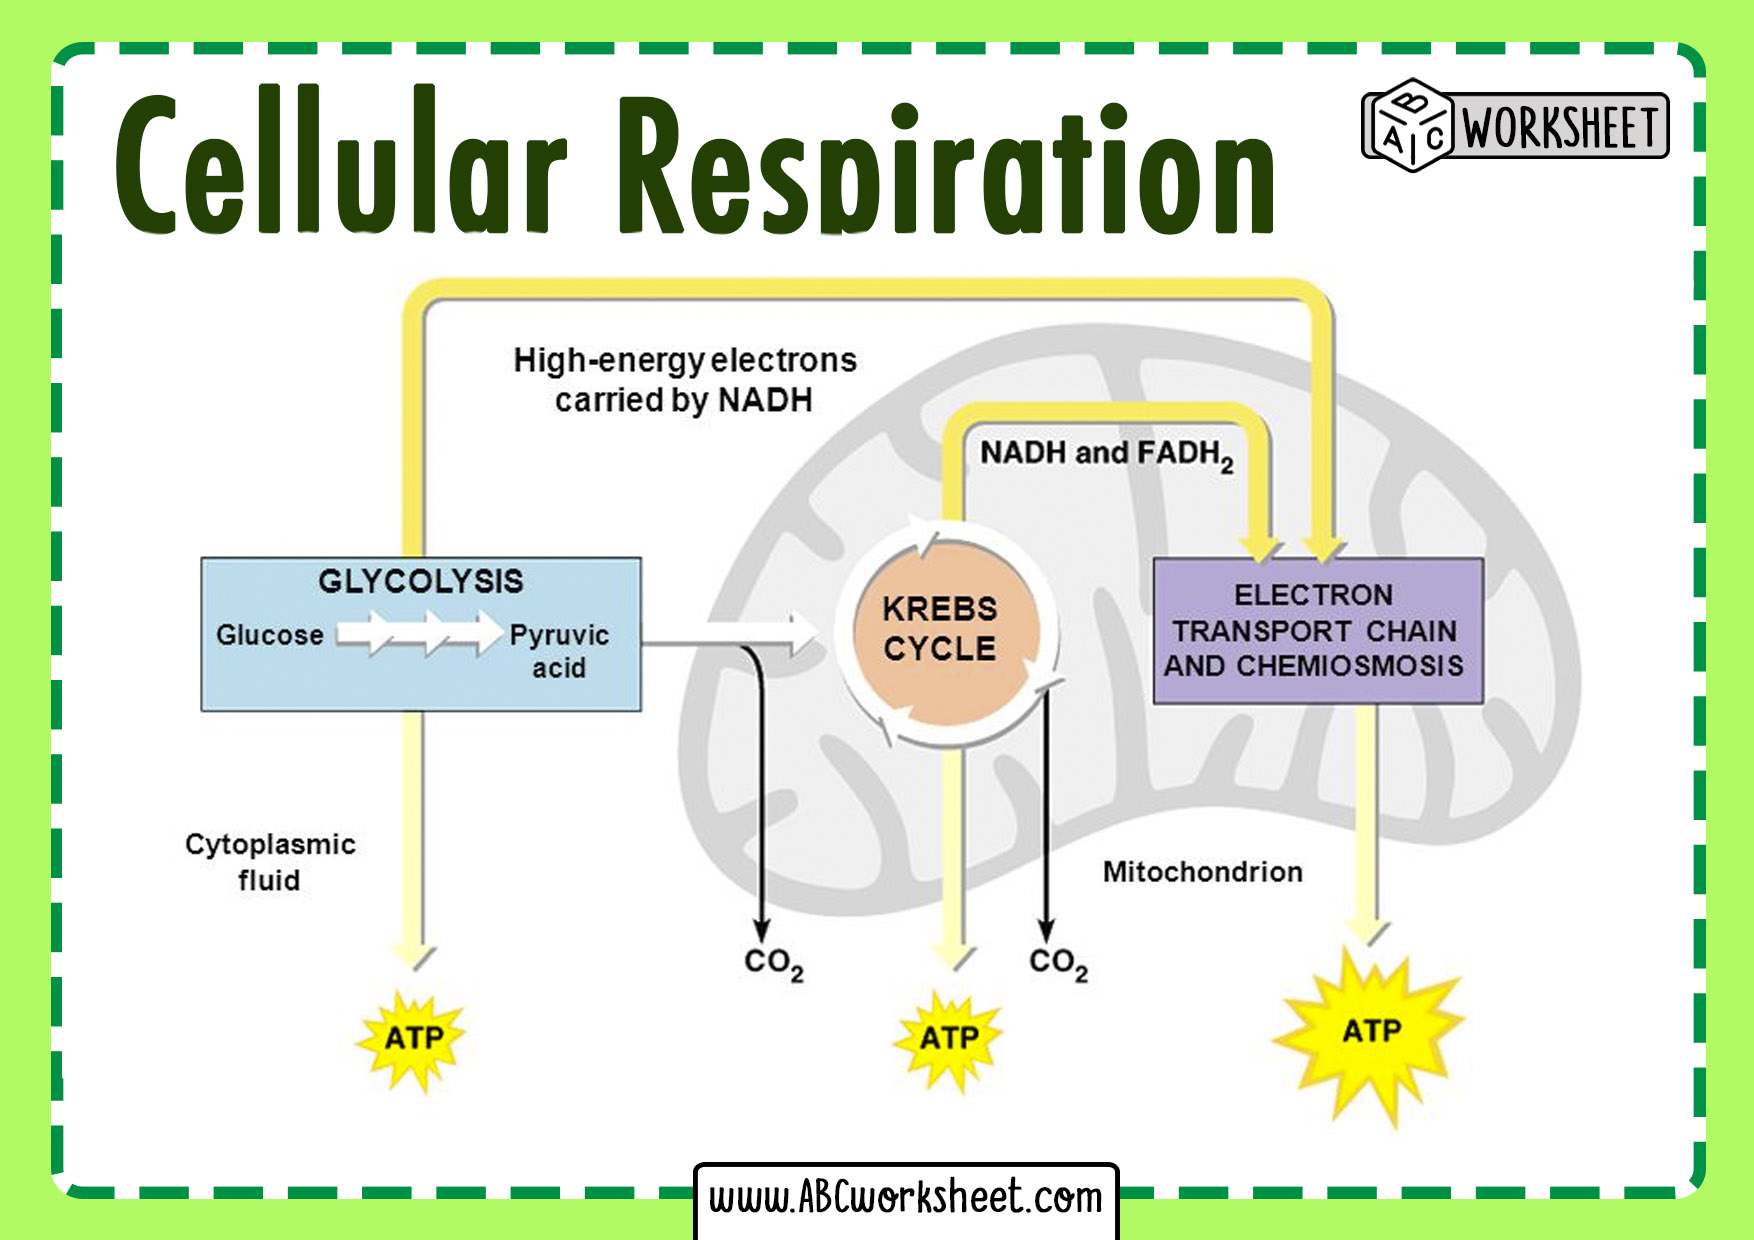 Cellular Respiration Cycle ABC Worksheet